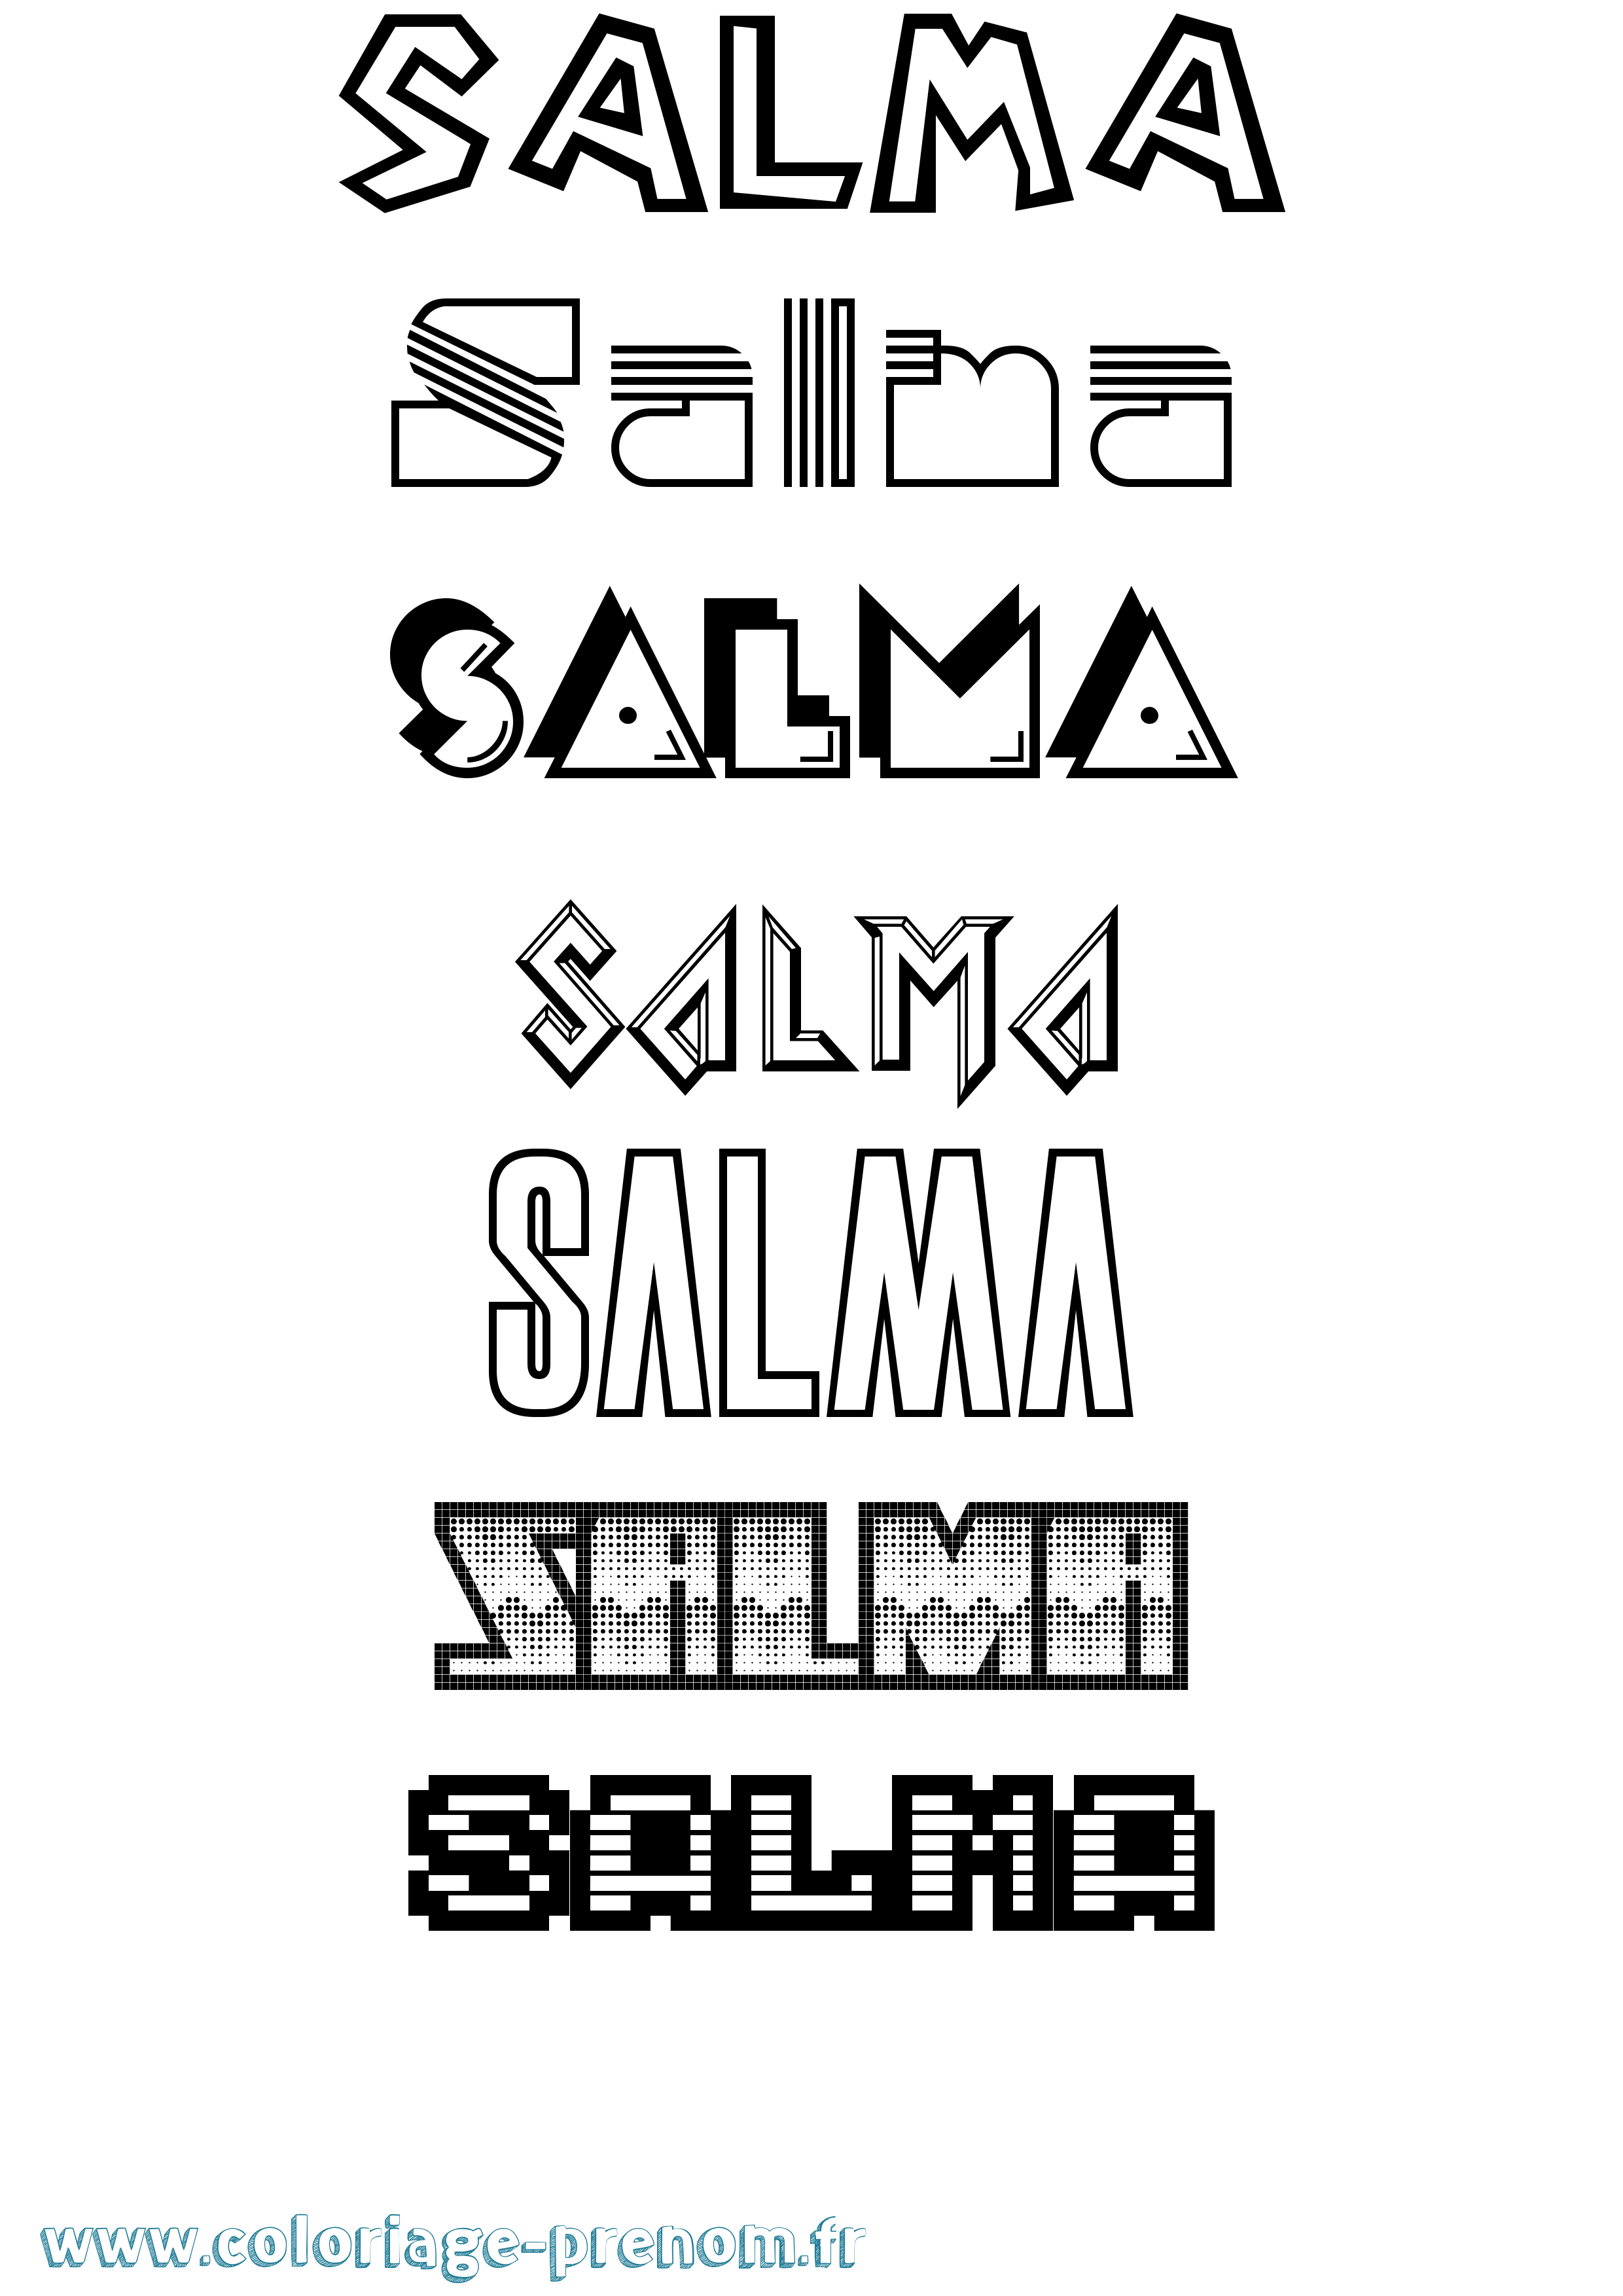 Coloriage prénom Salma